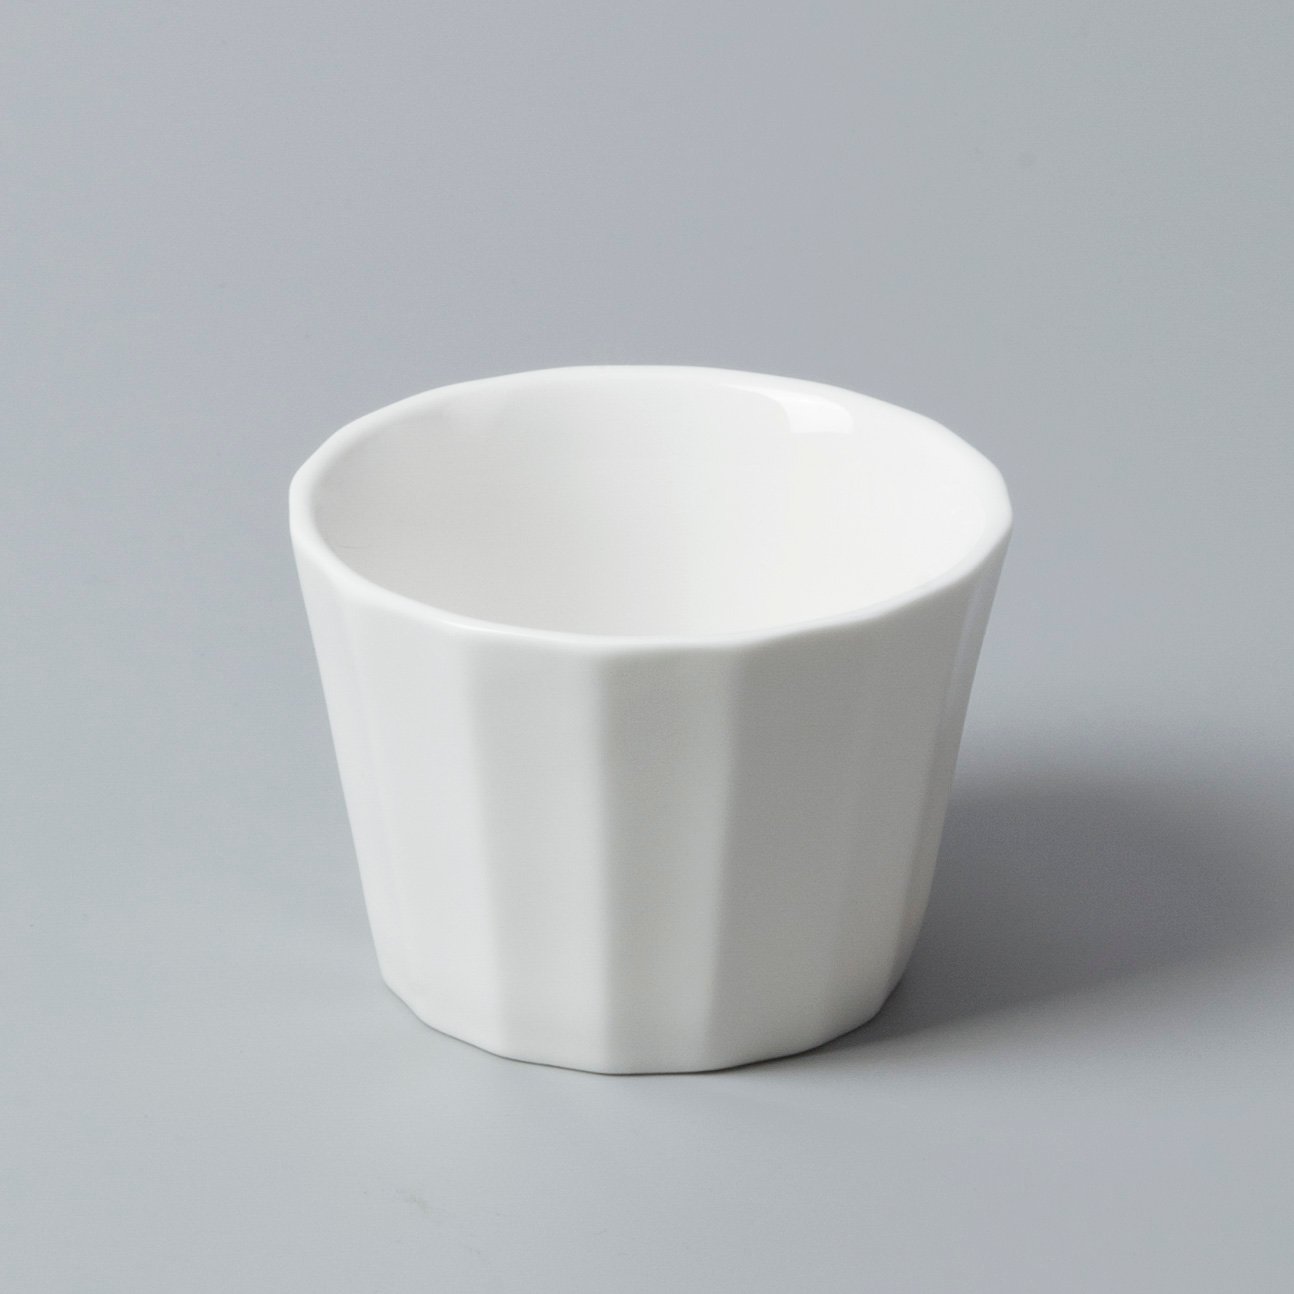 Two Eight fashion white porcelain platter Italian style for dinning room-12